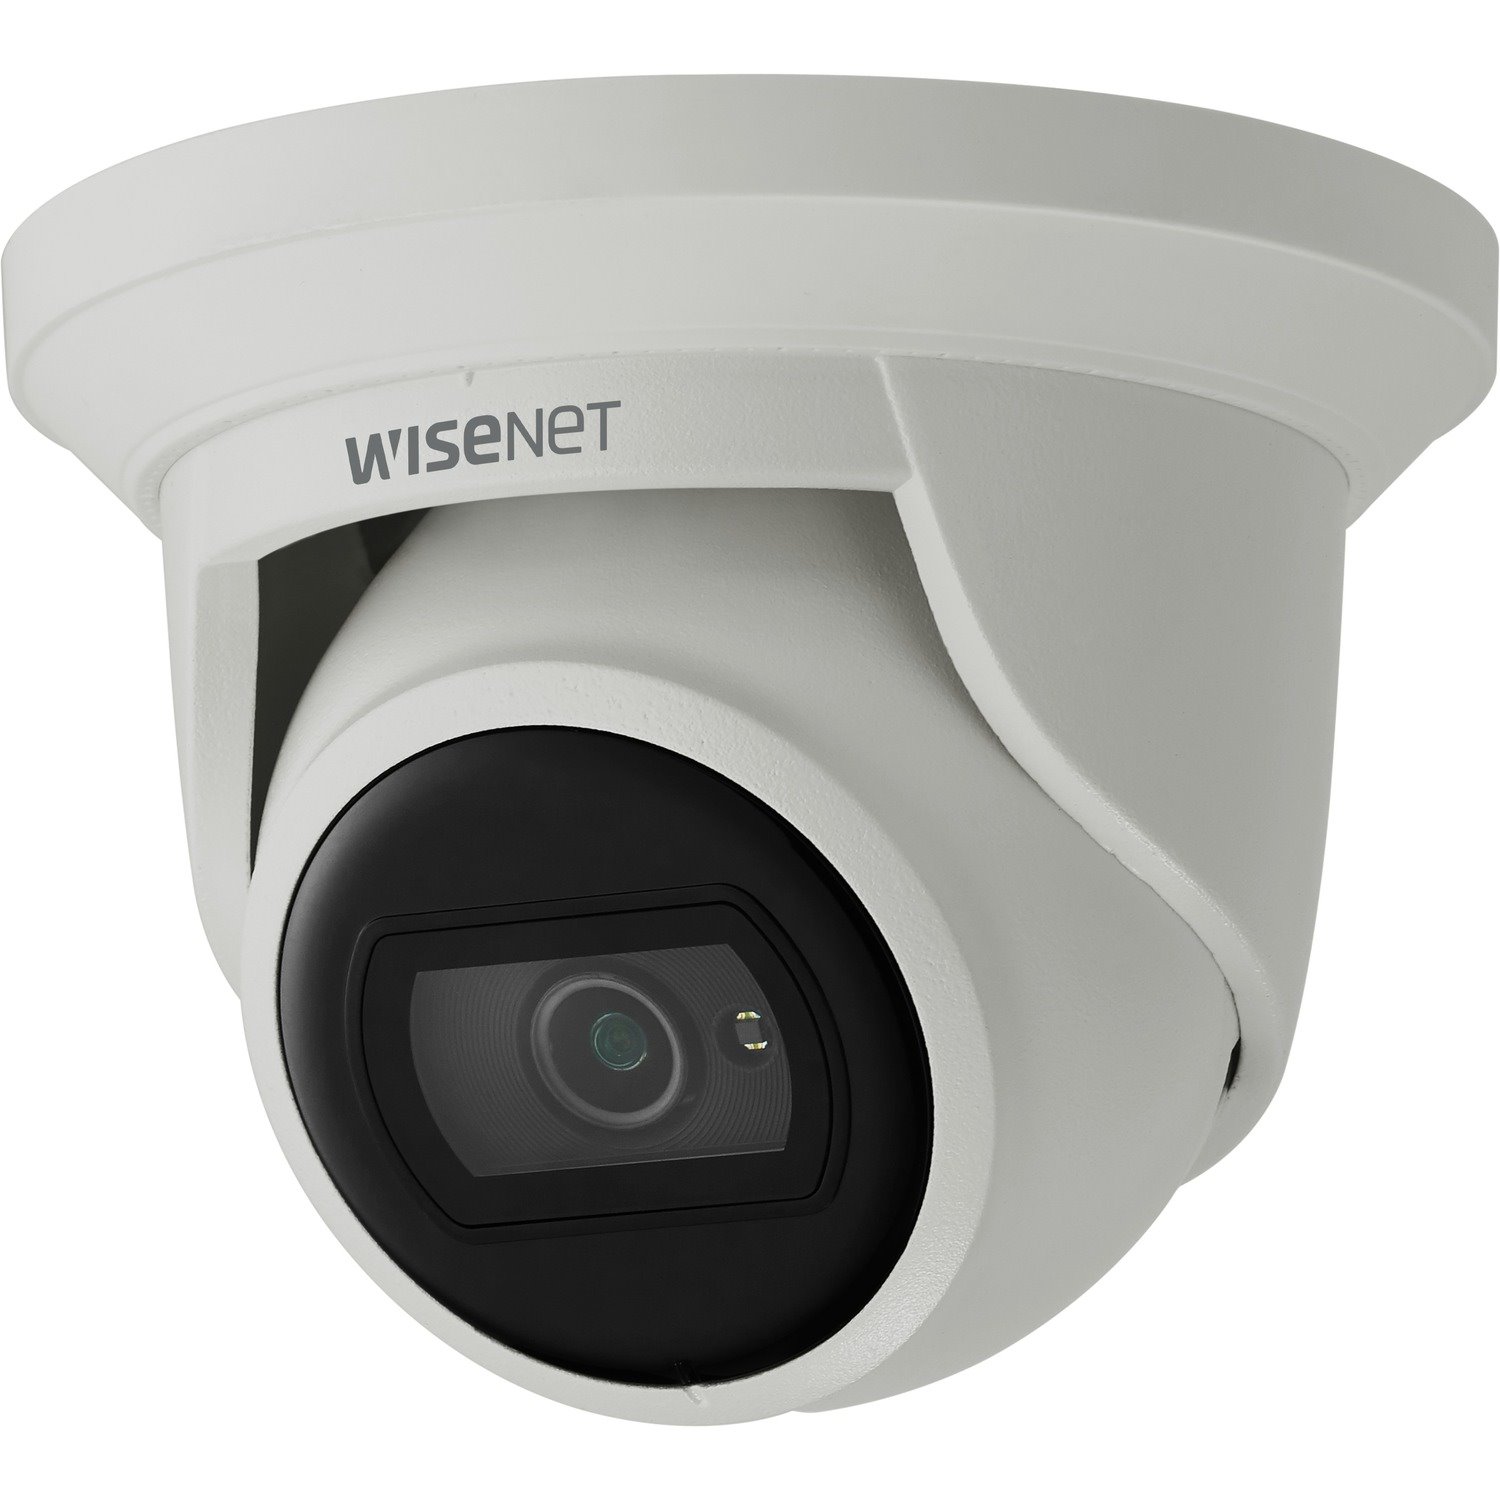 Wisenet ANE-L7012R 4 Megapixel Network Camera - Color - Flateye